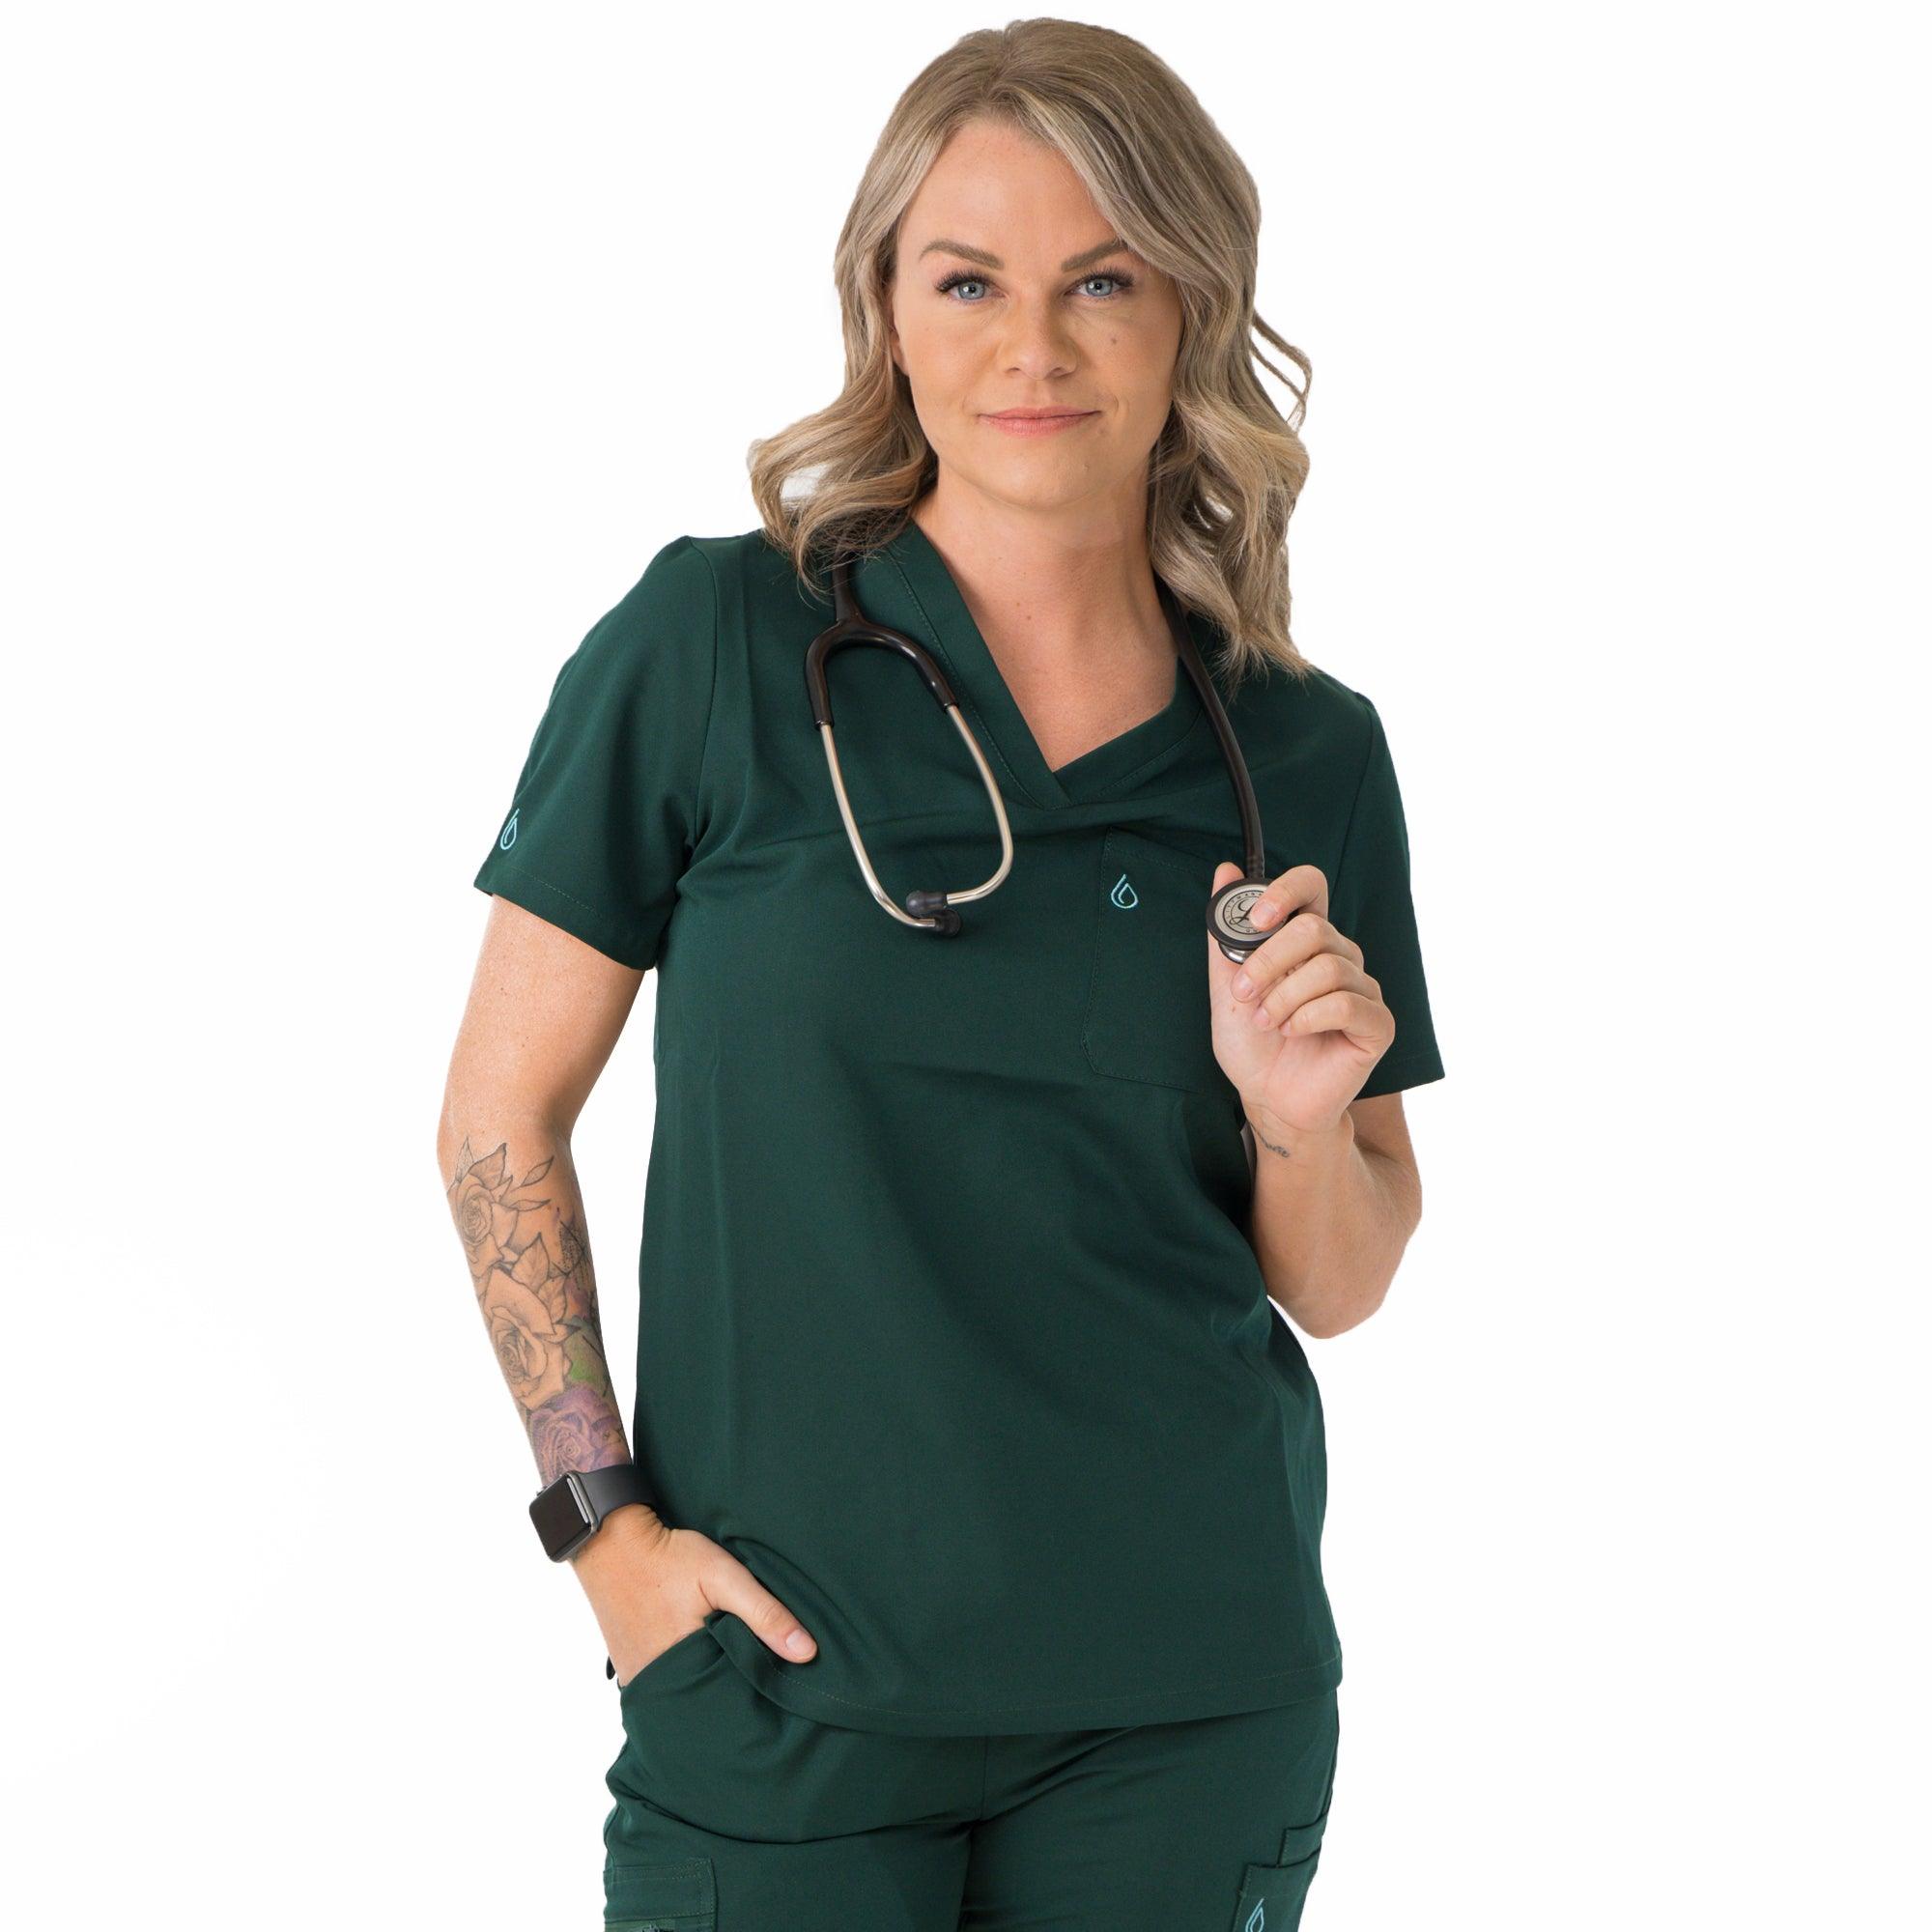 Nurses Scrubs UK  Quality Scrubs for Nurses - Moda Per Cura